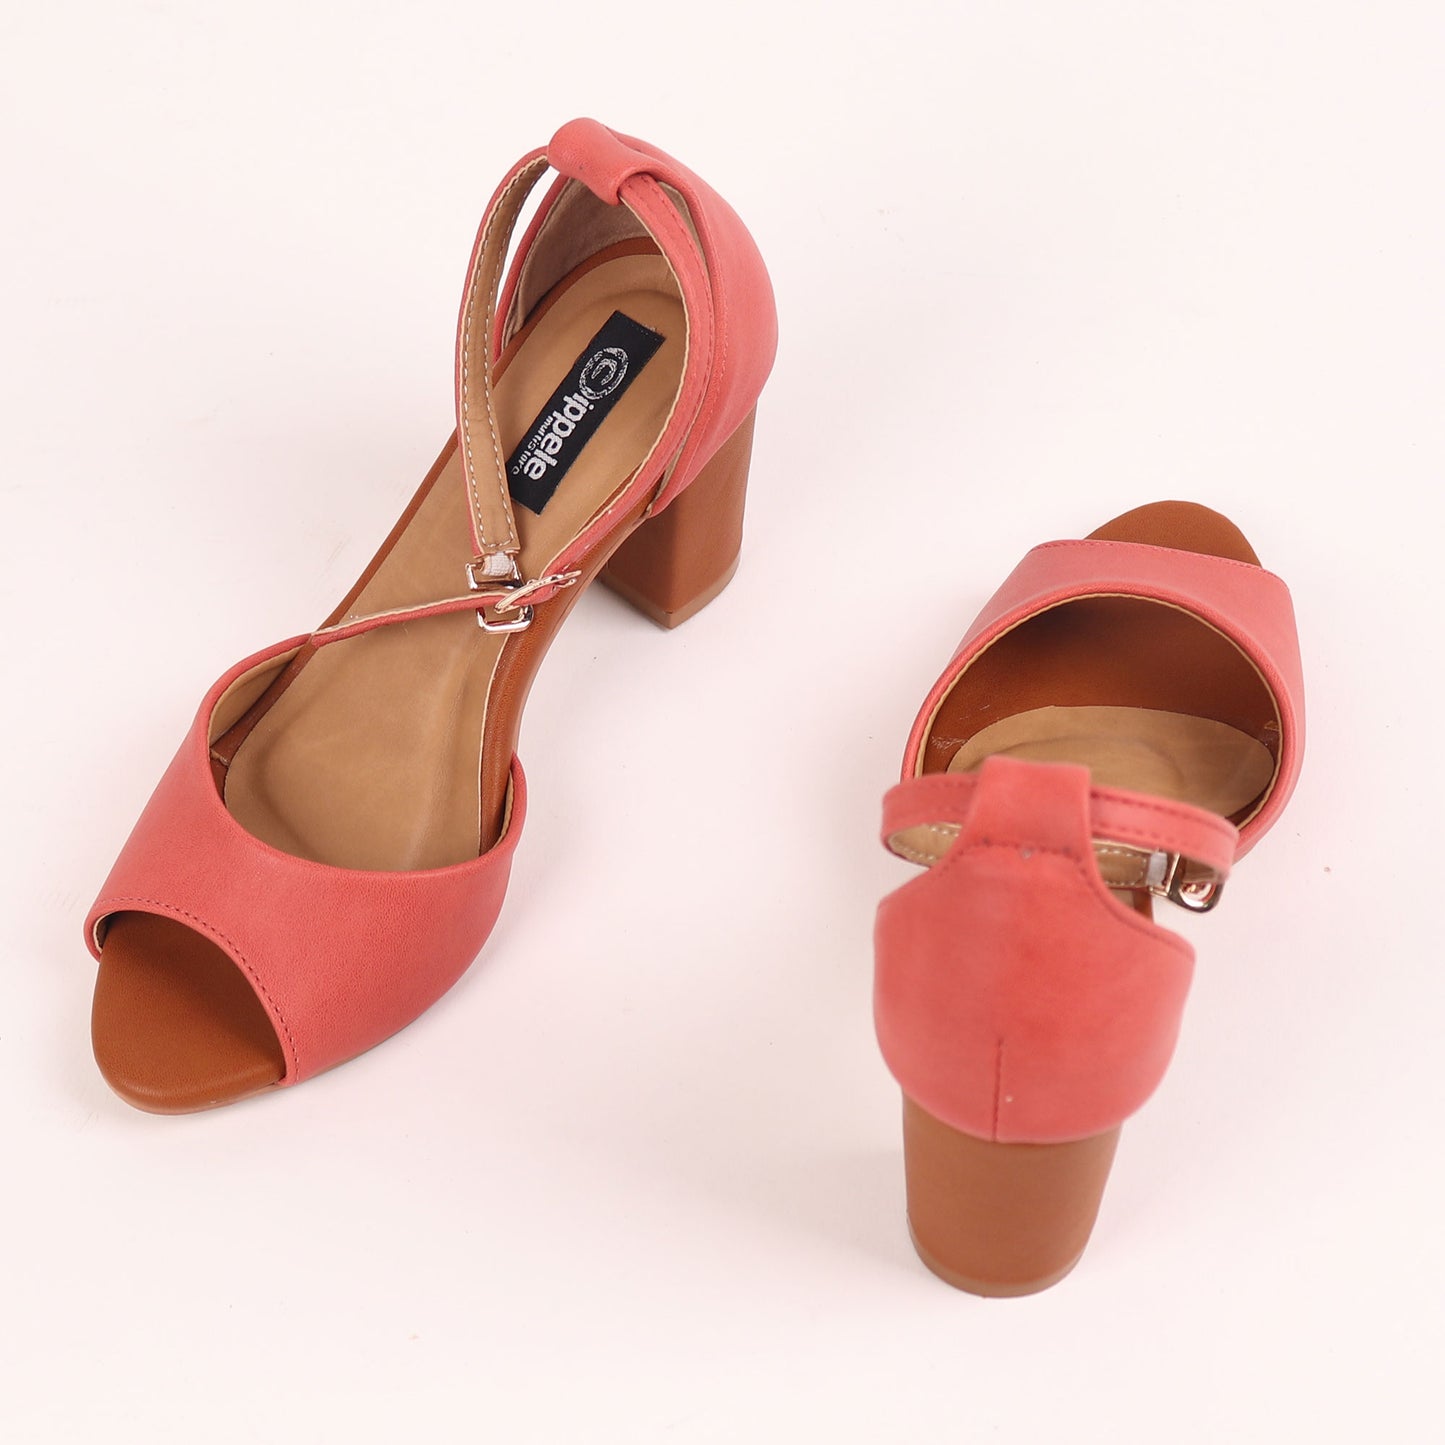 Foot Wear,The fashionista Block Heels In Peach Pink - Cippele Multi Store